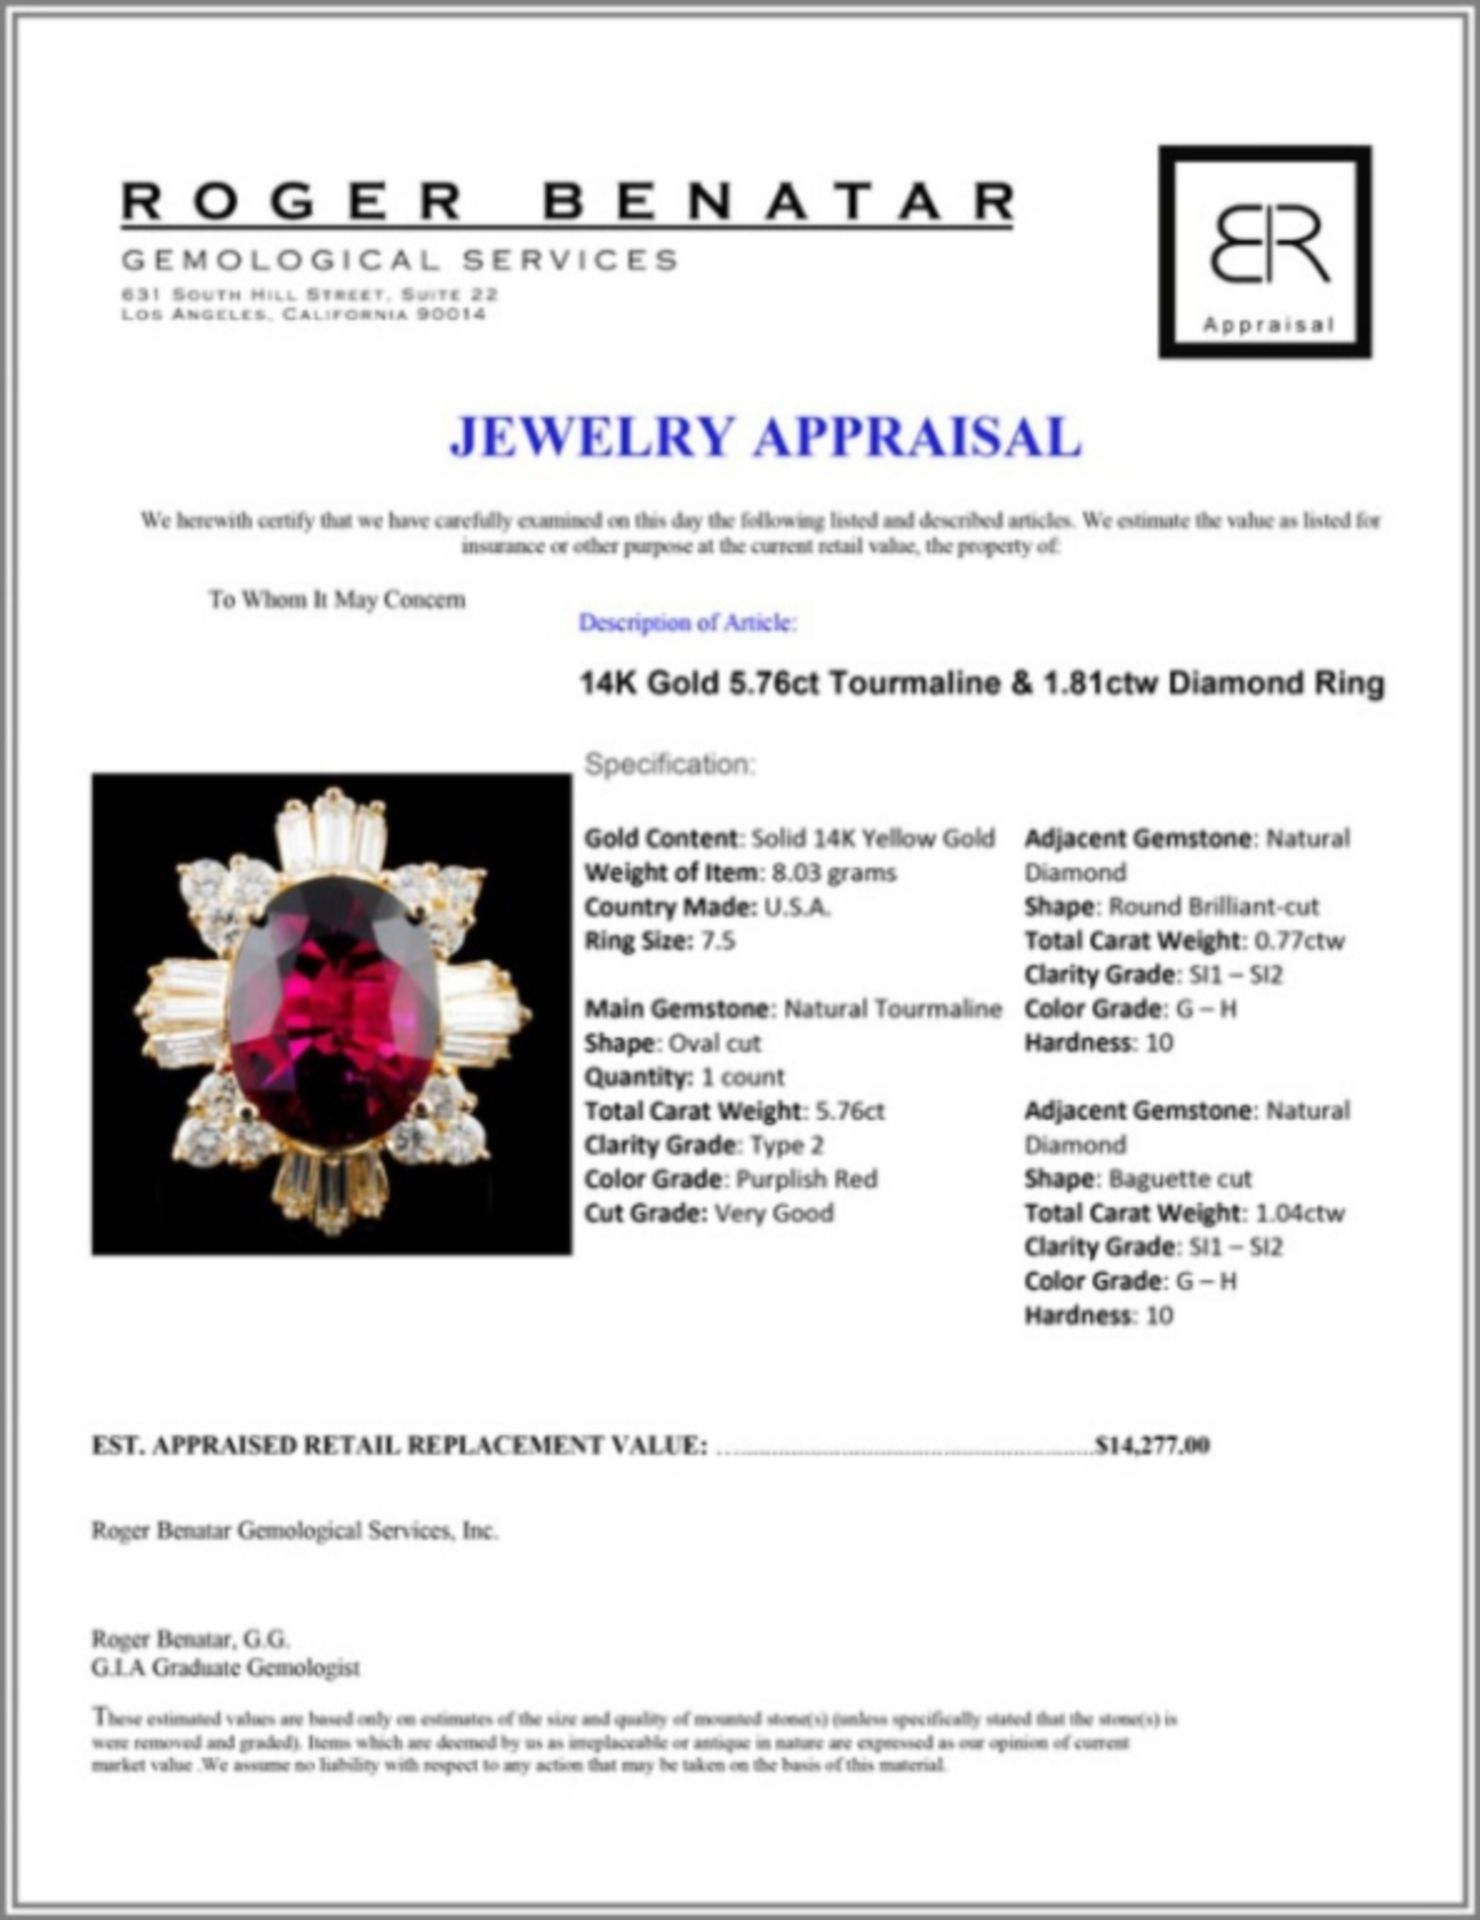 14K Gold 5.76ct Tourmaline & 1.81ctw Diamond Ring - Image 4 of 4